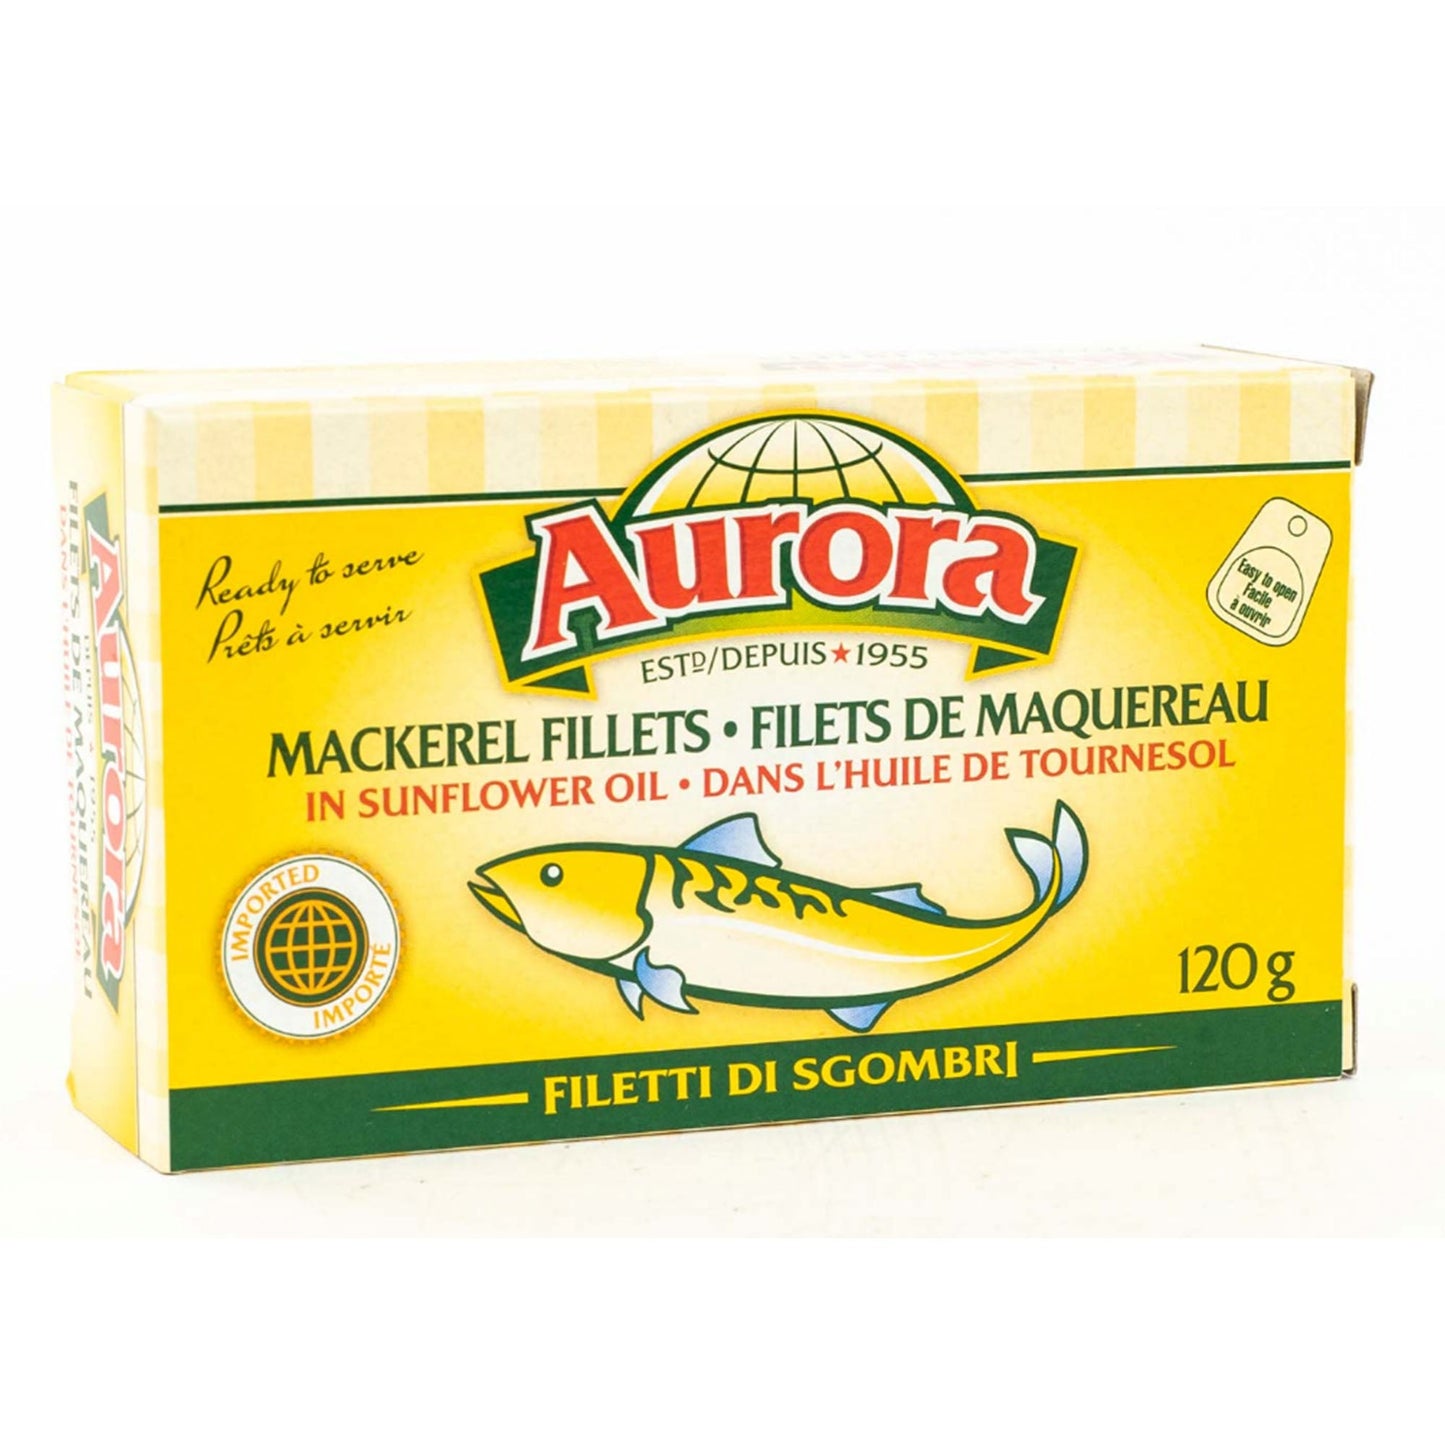 Aurora Mackerel 120G